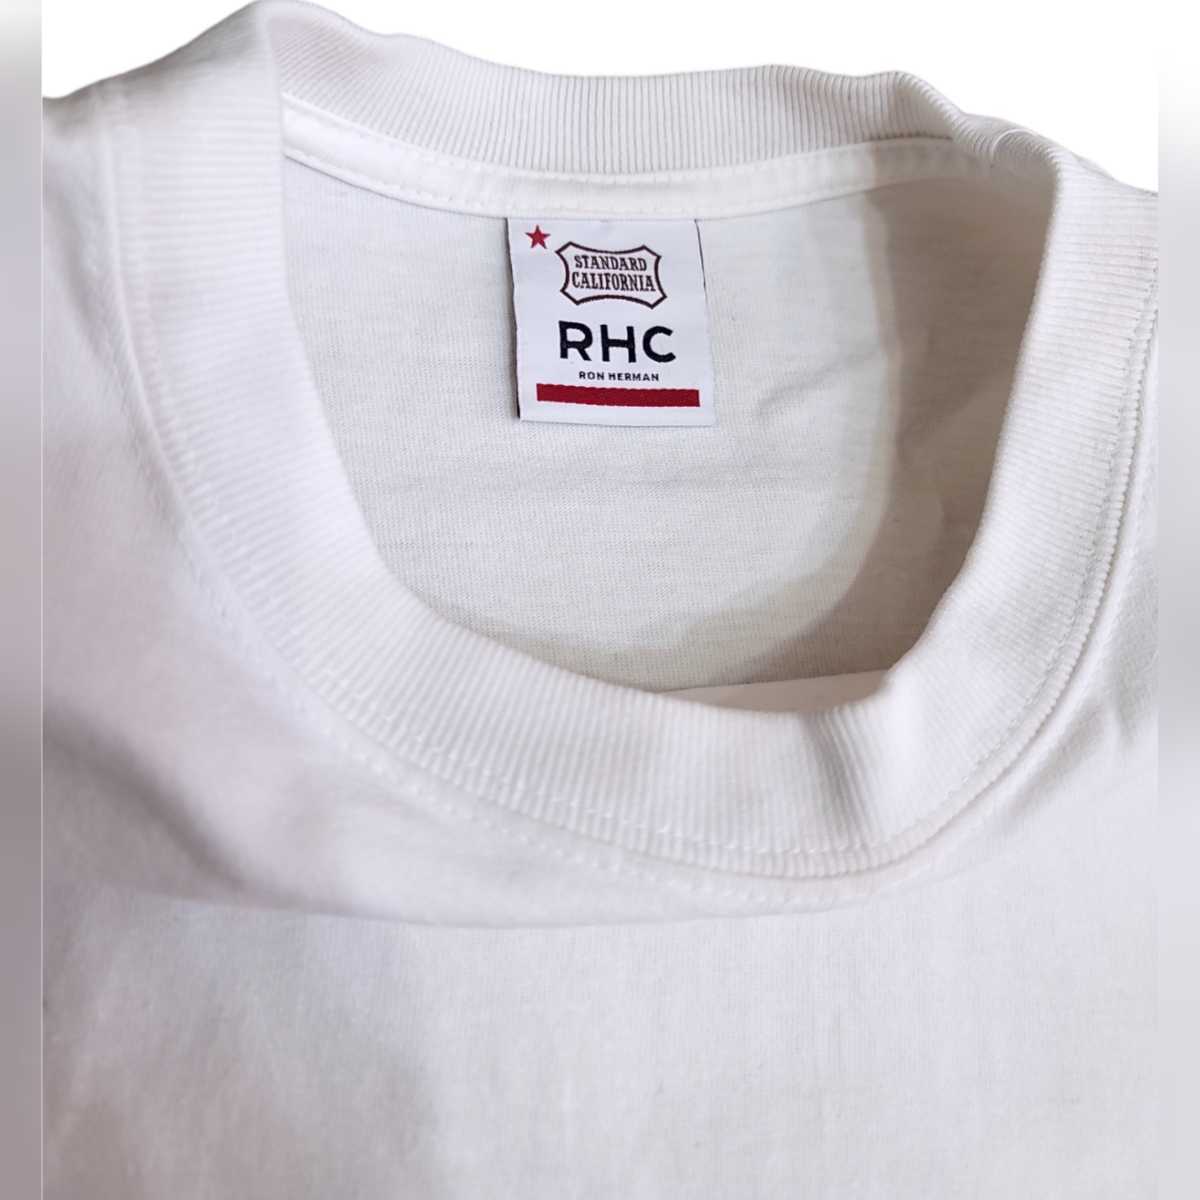 STANDARD CALIFORNIA for RHC RON HERMAN スタンダードカリフォルニア ロンハーマン別注 コラボ BETTER TOGETHER バックプリント Tシャツ_画像8